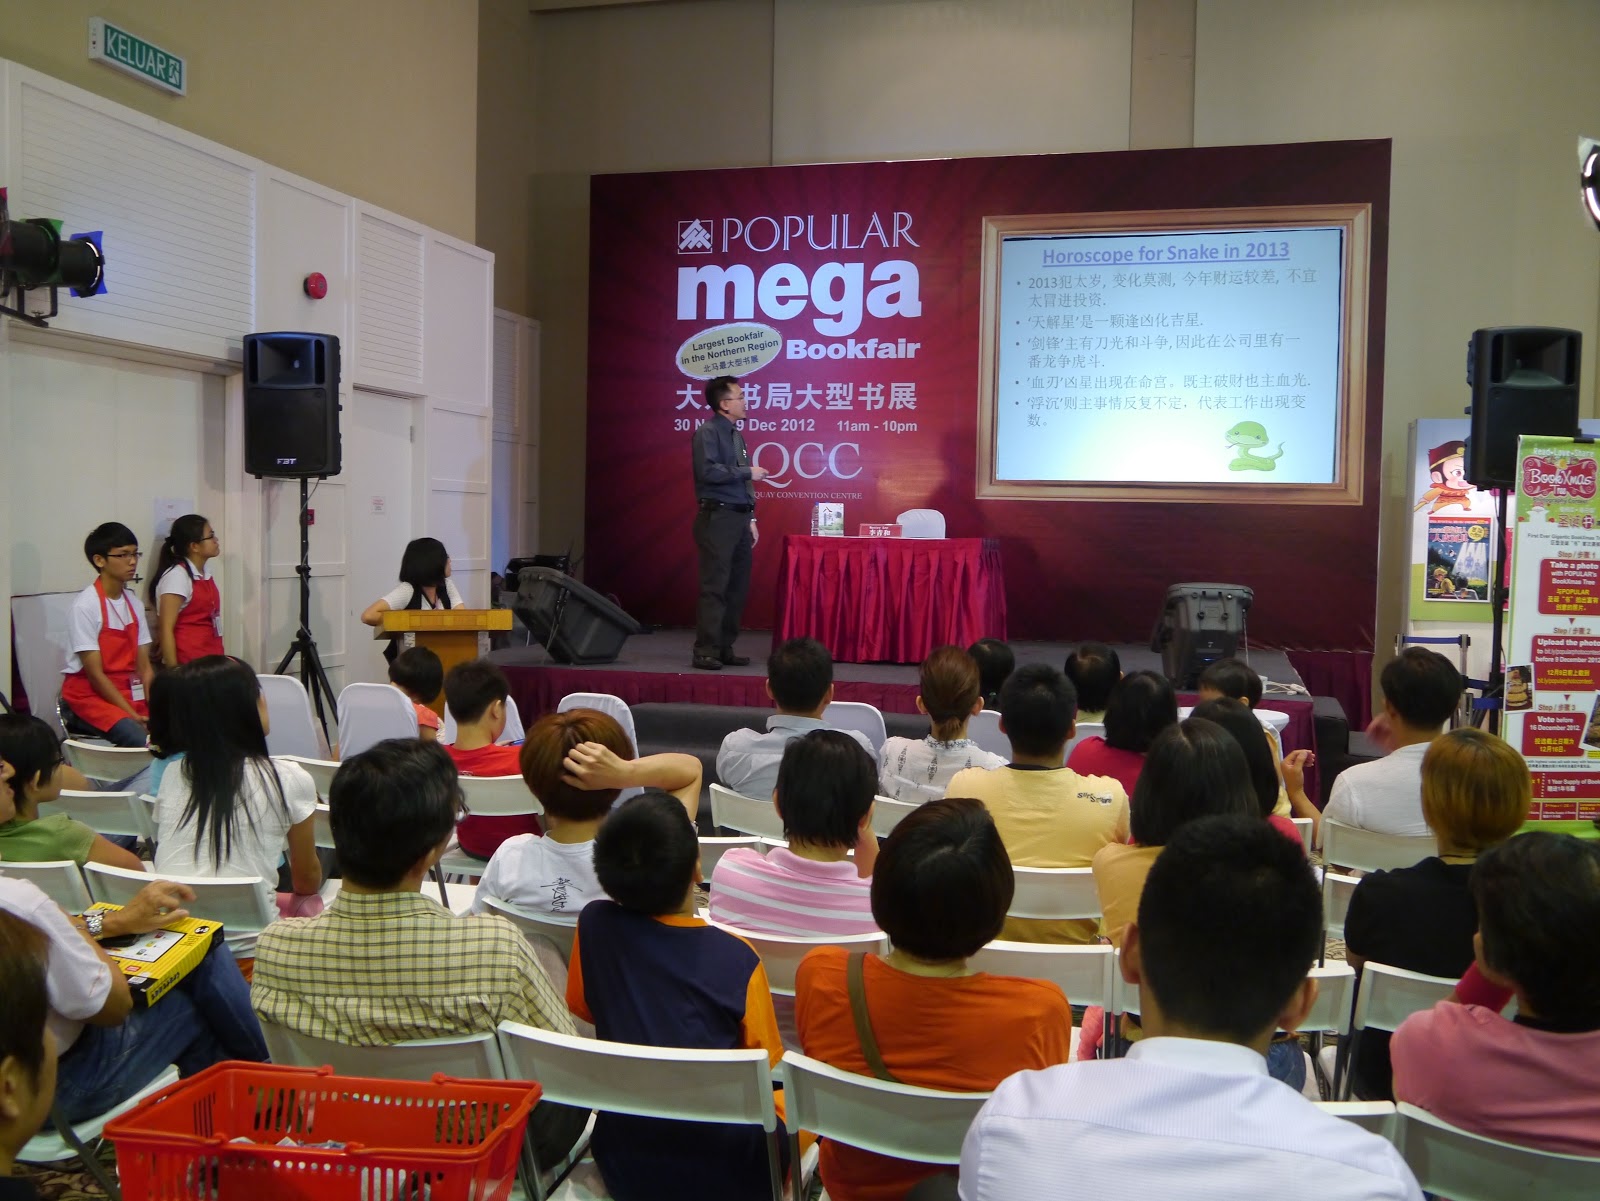 Feng Shui: My feng shui talk at the POPULAR Mega Bookfair ...